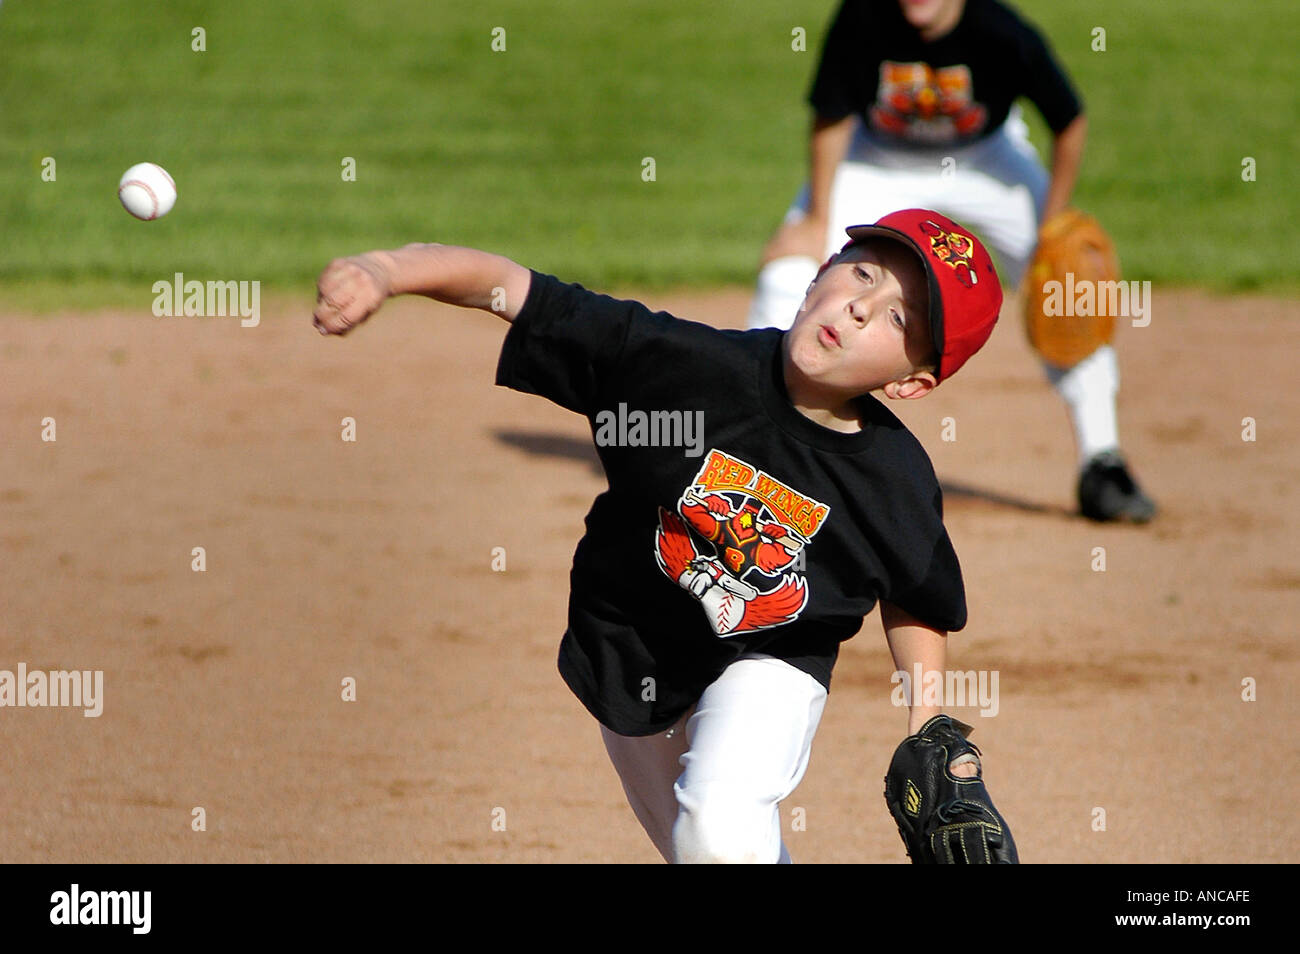 Little league Baseball Action Throwing Pitching baseball ball Stock Photo